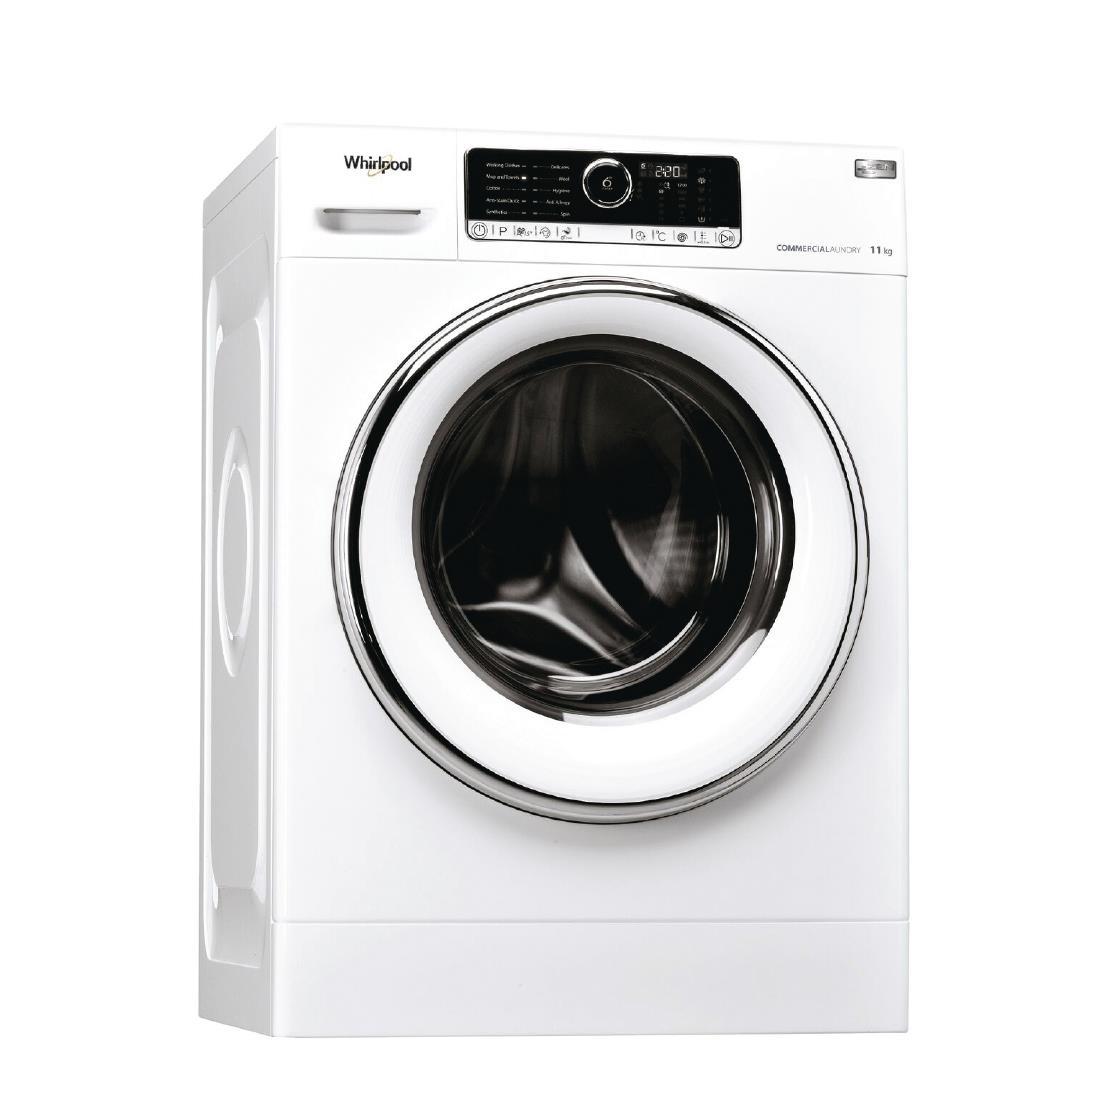 Whirlpool Commercial Washing Machine White 11kg - DW616  - 1